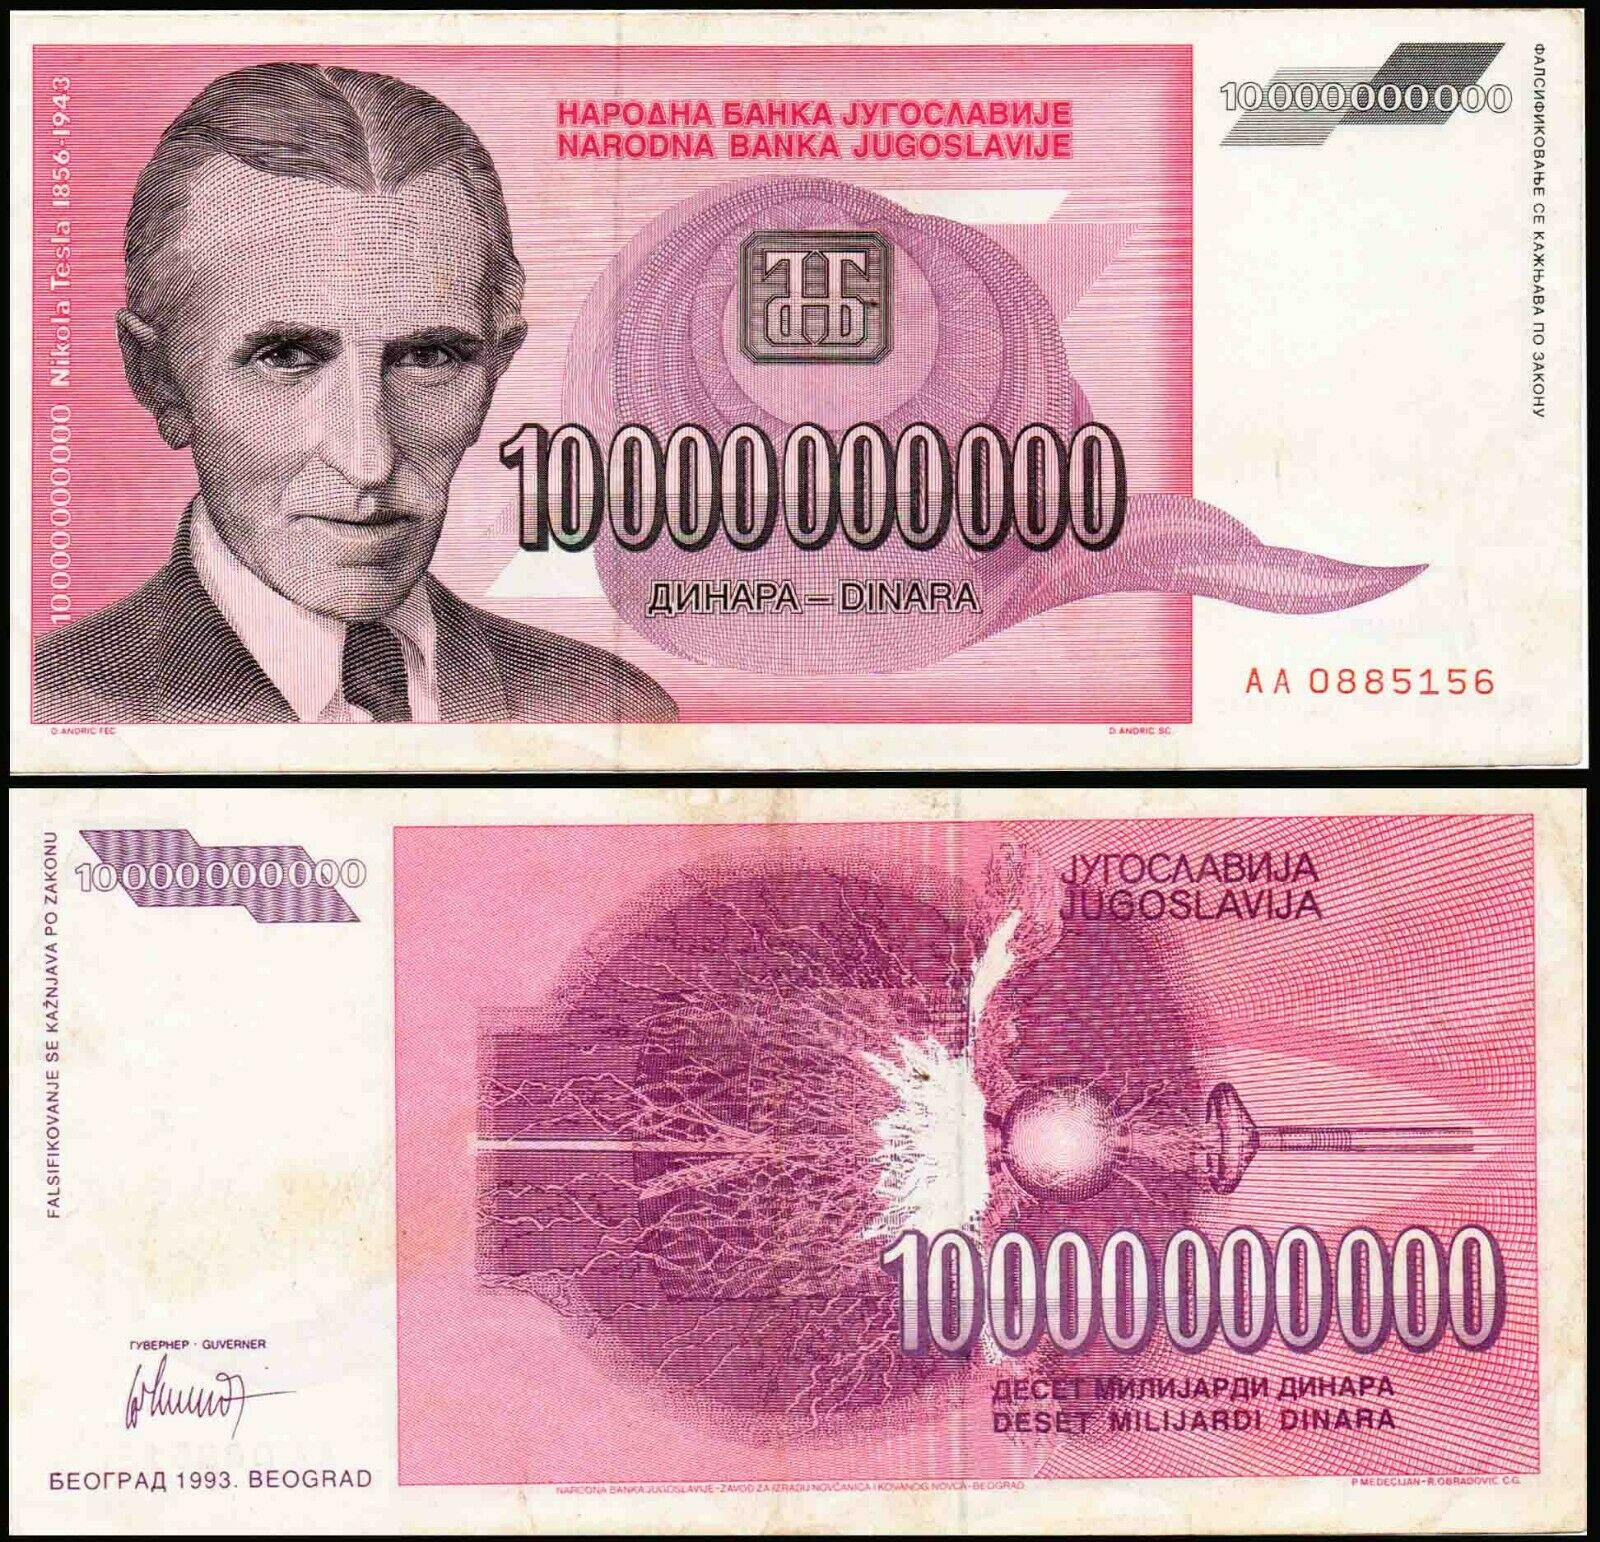 Yugoslavia Nikola Tesla 10 Billion Dinara Banknote Hyperinflation Currency